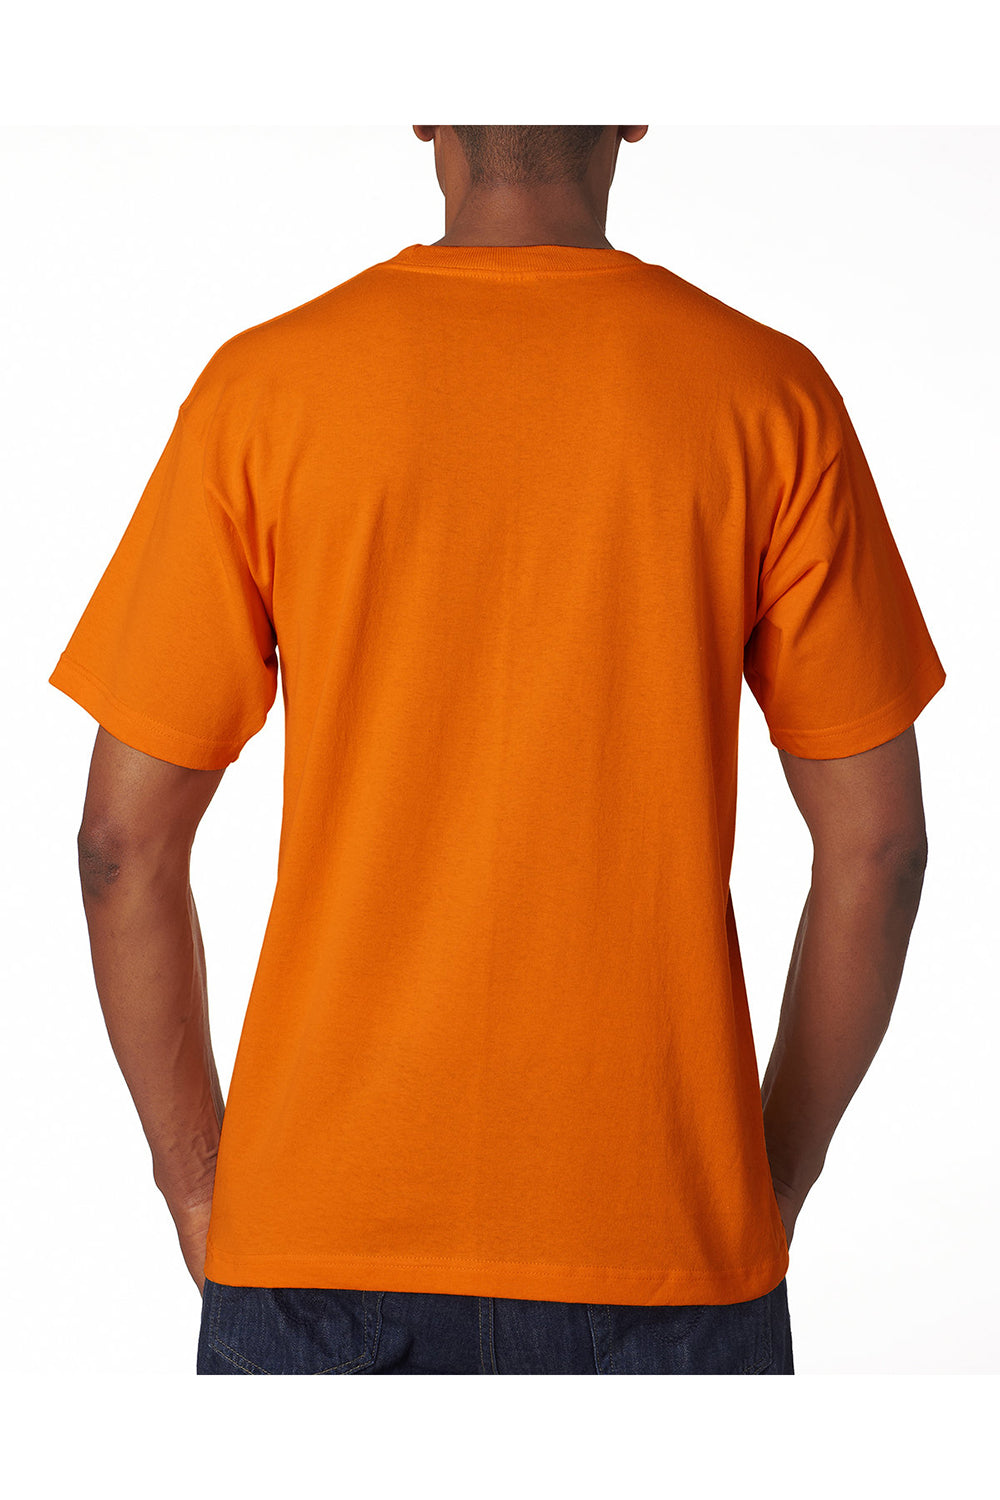 Bayside BA5100 Mens USA Made Short Sleeve Crewneck T-Shirt Bright Orange Model Back